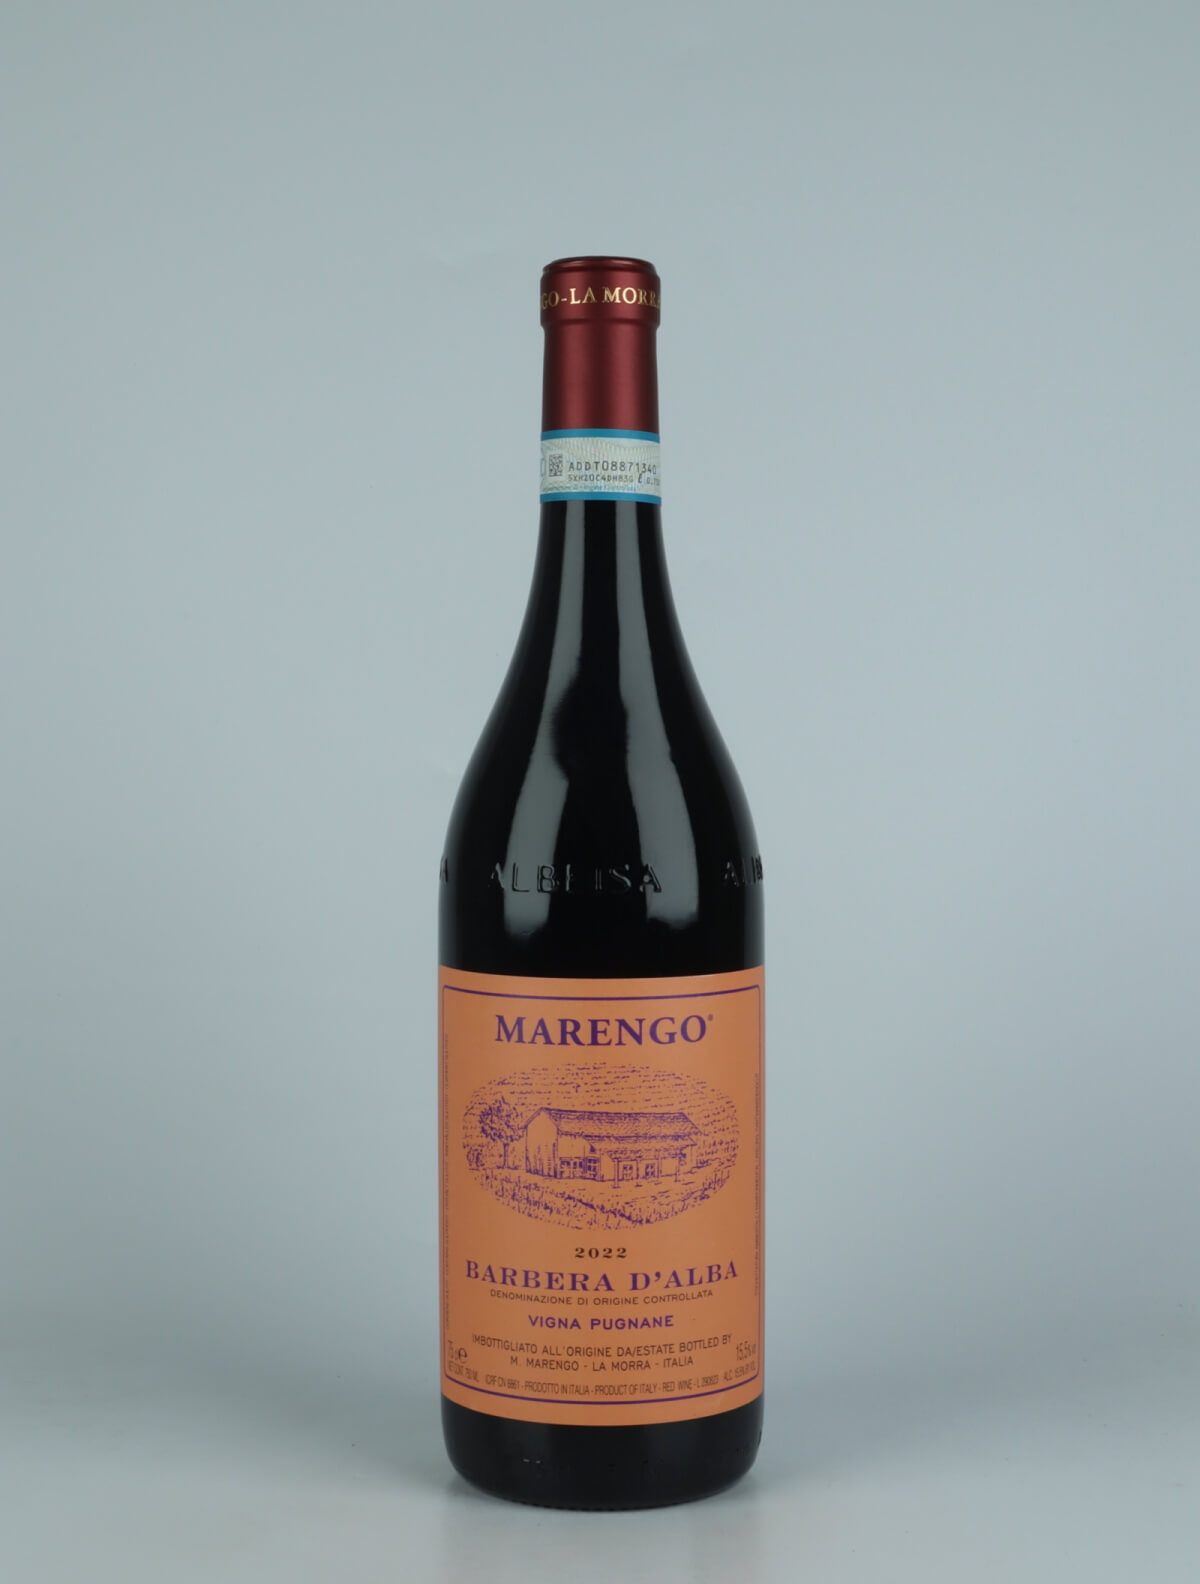 En flaske 2022 Barbera d'Alba - Pugnane Rødvin fra Mario Marengo, Piemonte i Italien